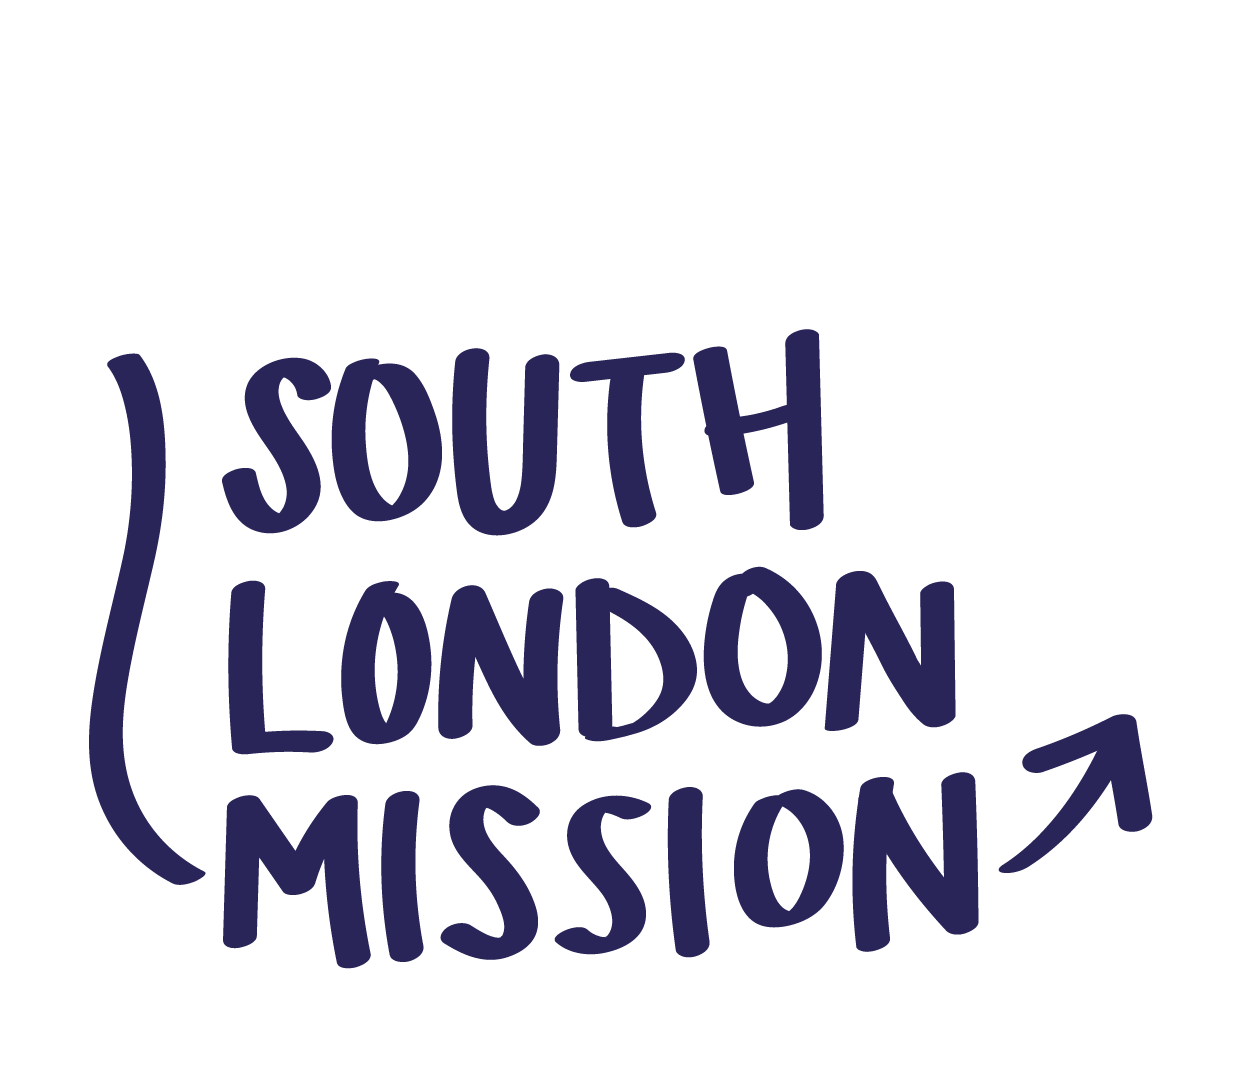 South London Mission